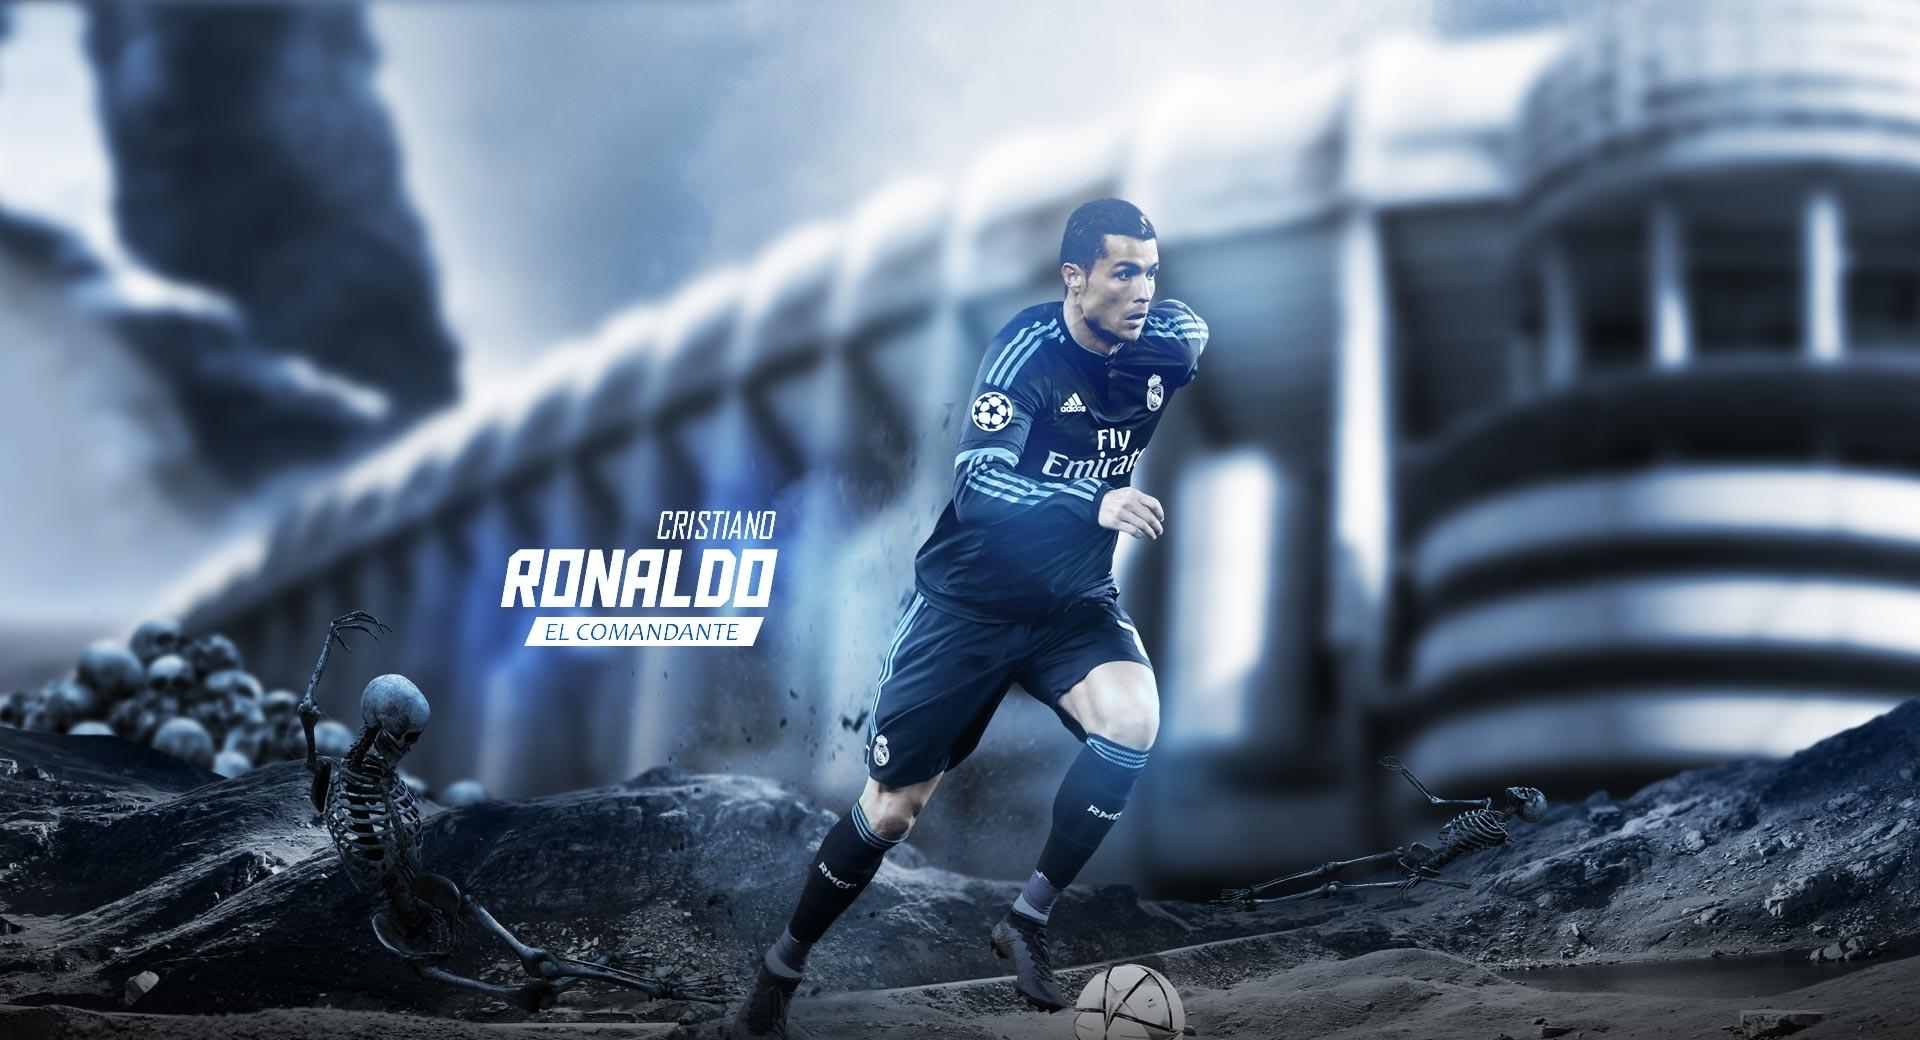 Cristiano Ronaldo - El Comandante at 320 x 480 iPhone size wallpapers HD quality